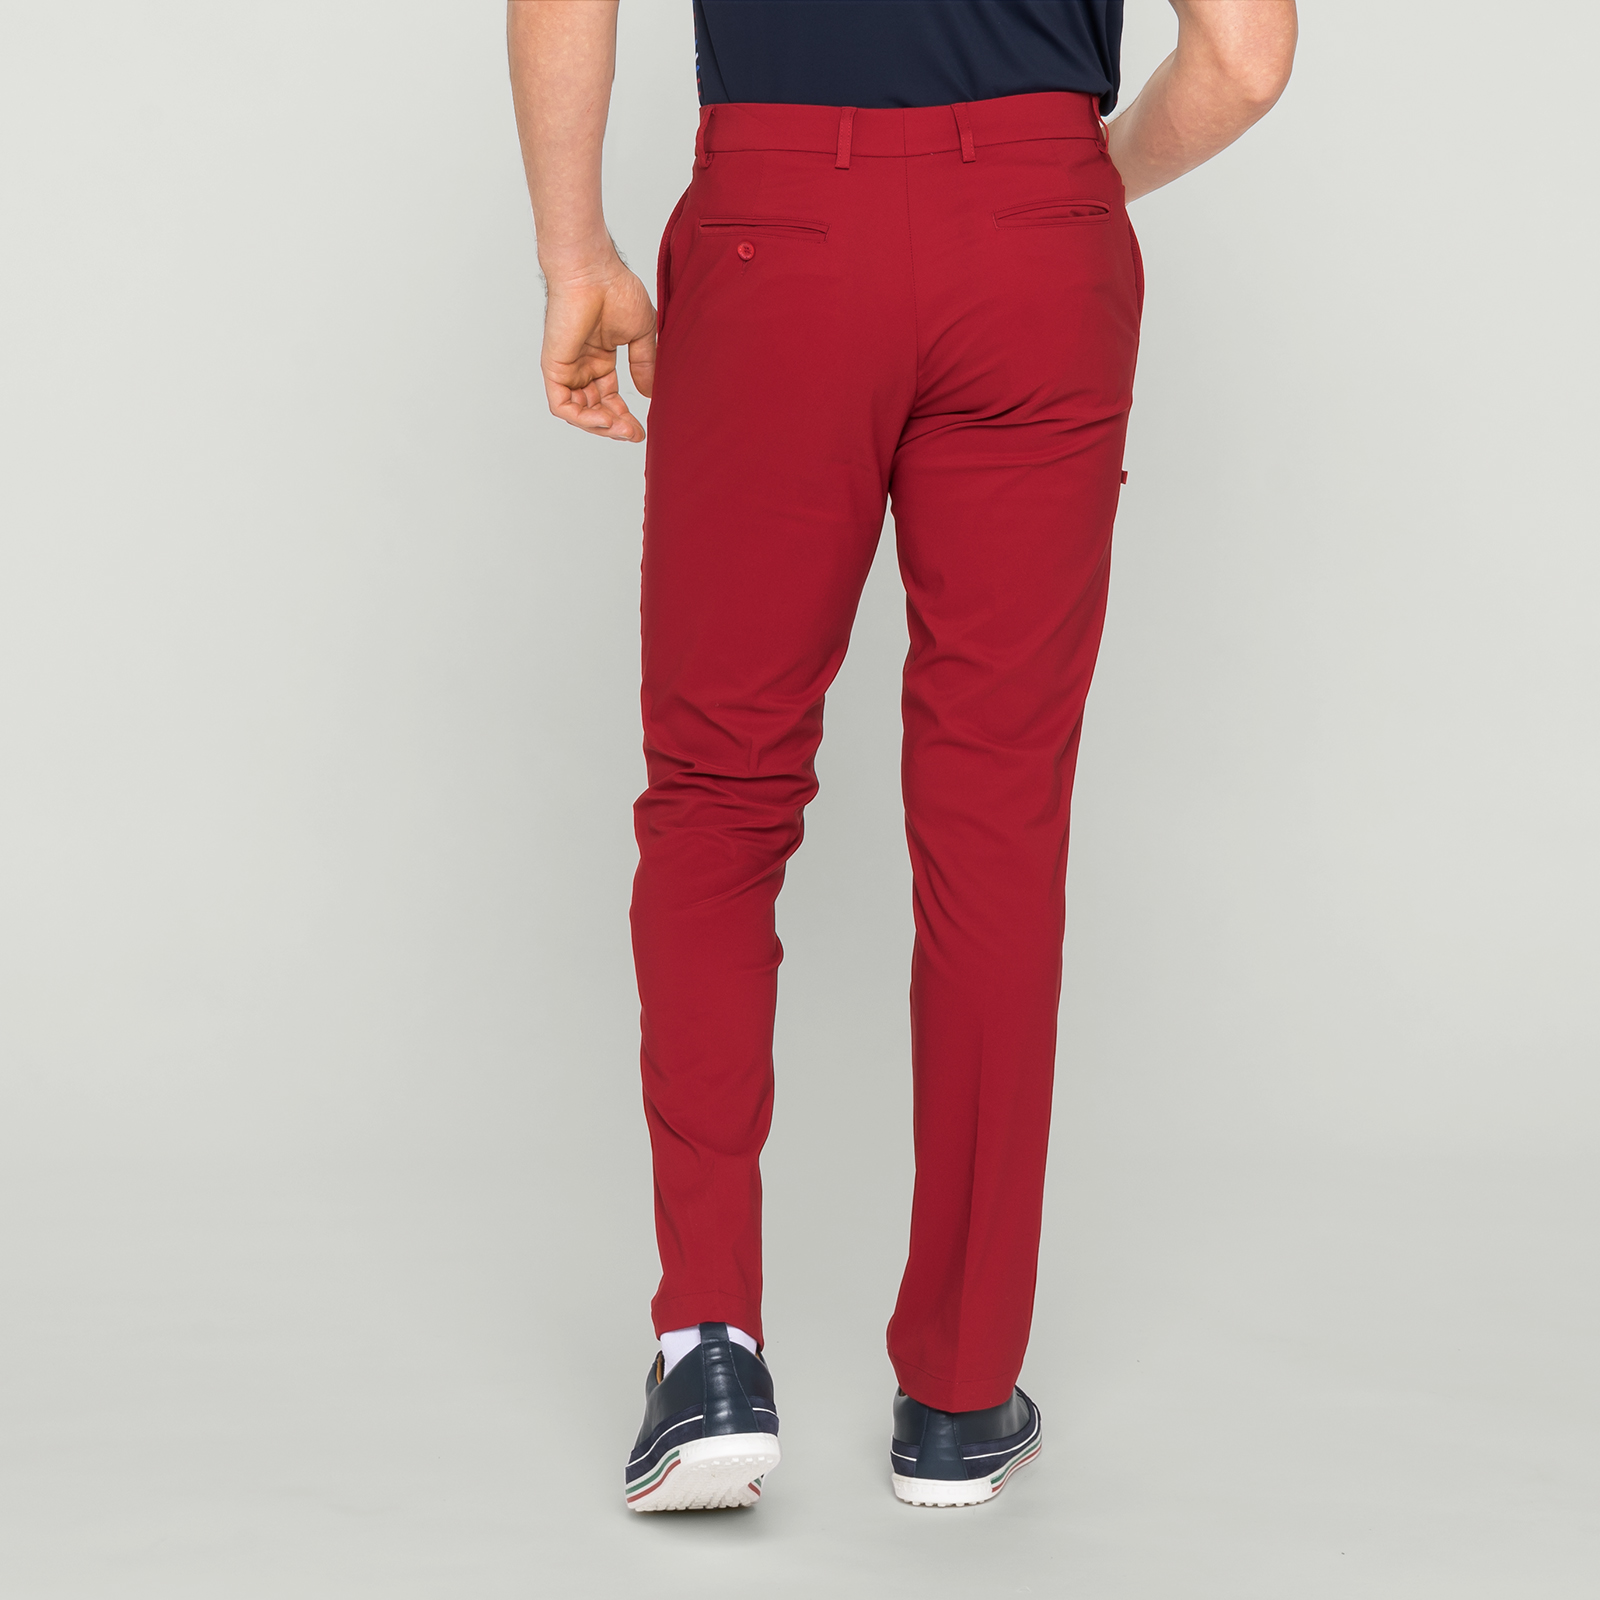 Moderni pantaloni uomo da golf